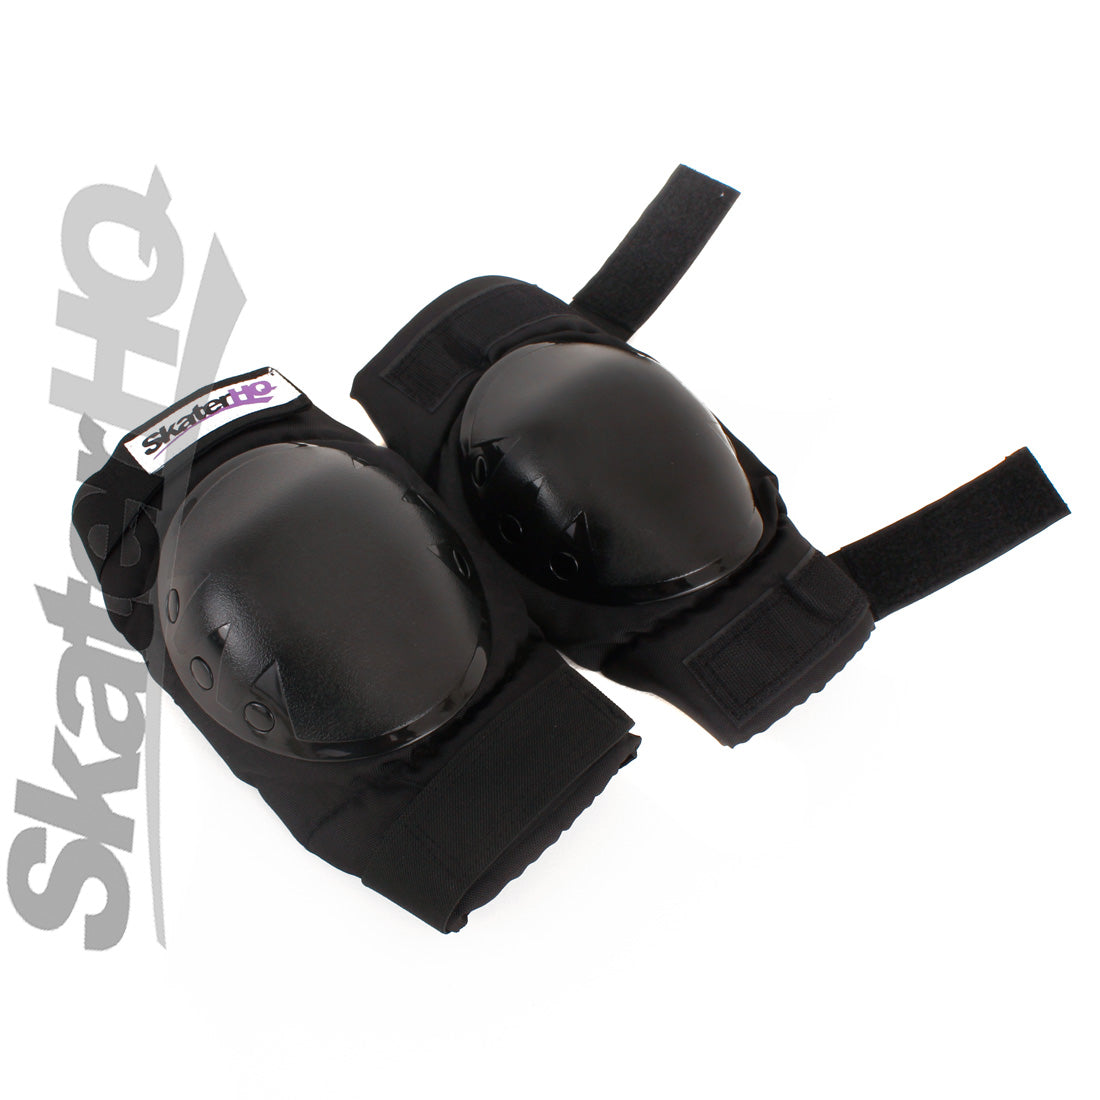 Skater HQ Tri Pack - Medium Protective Gear